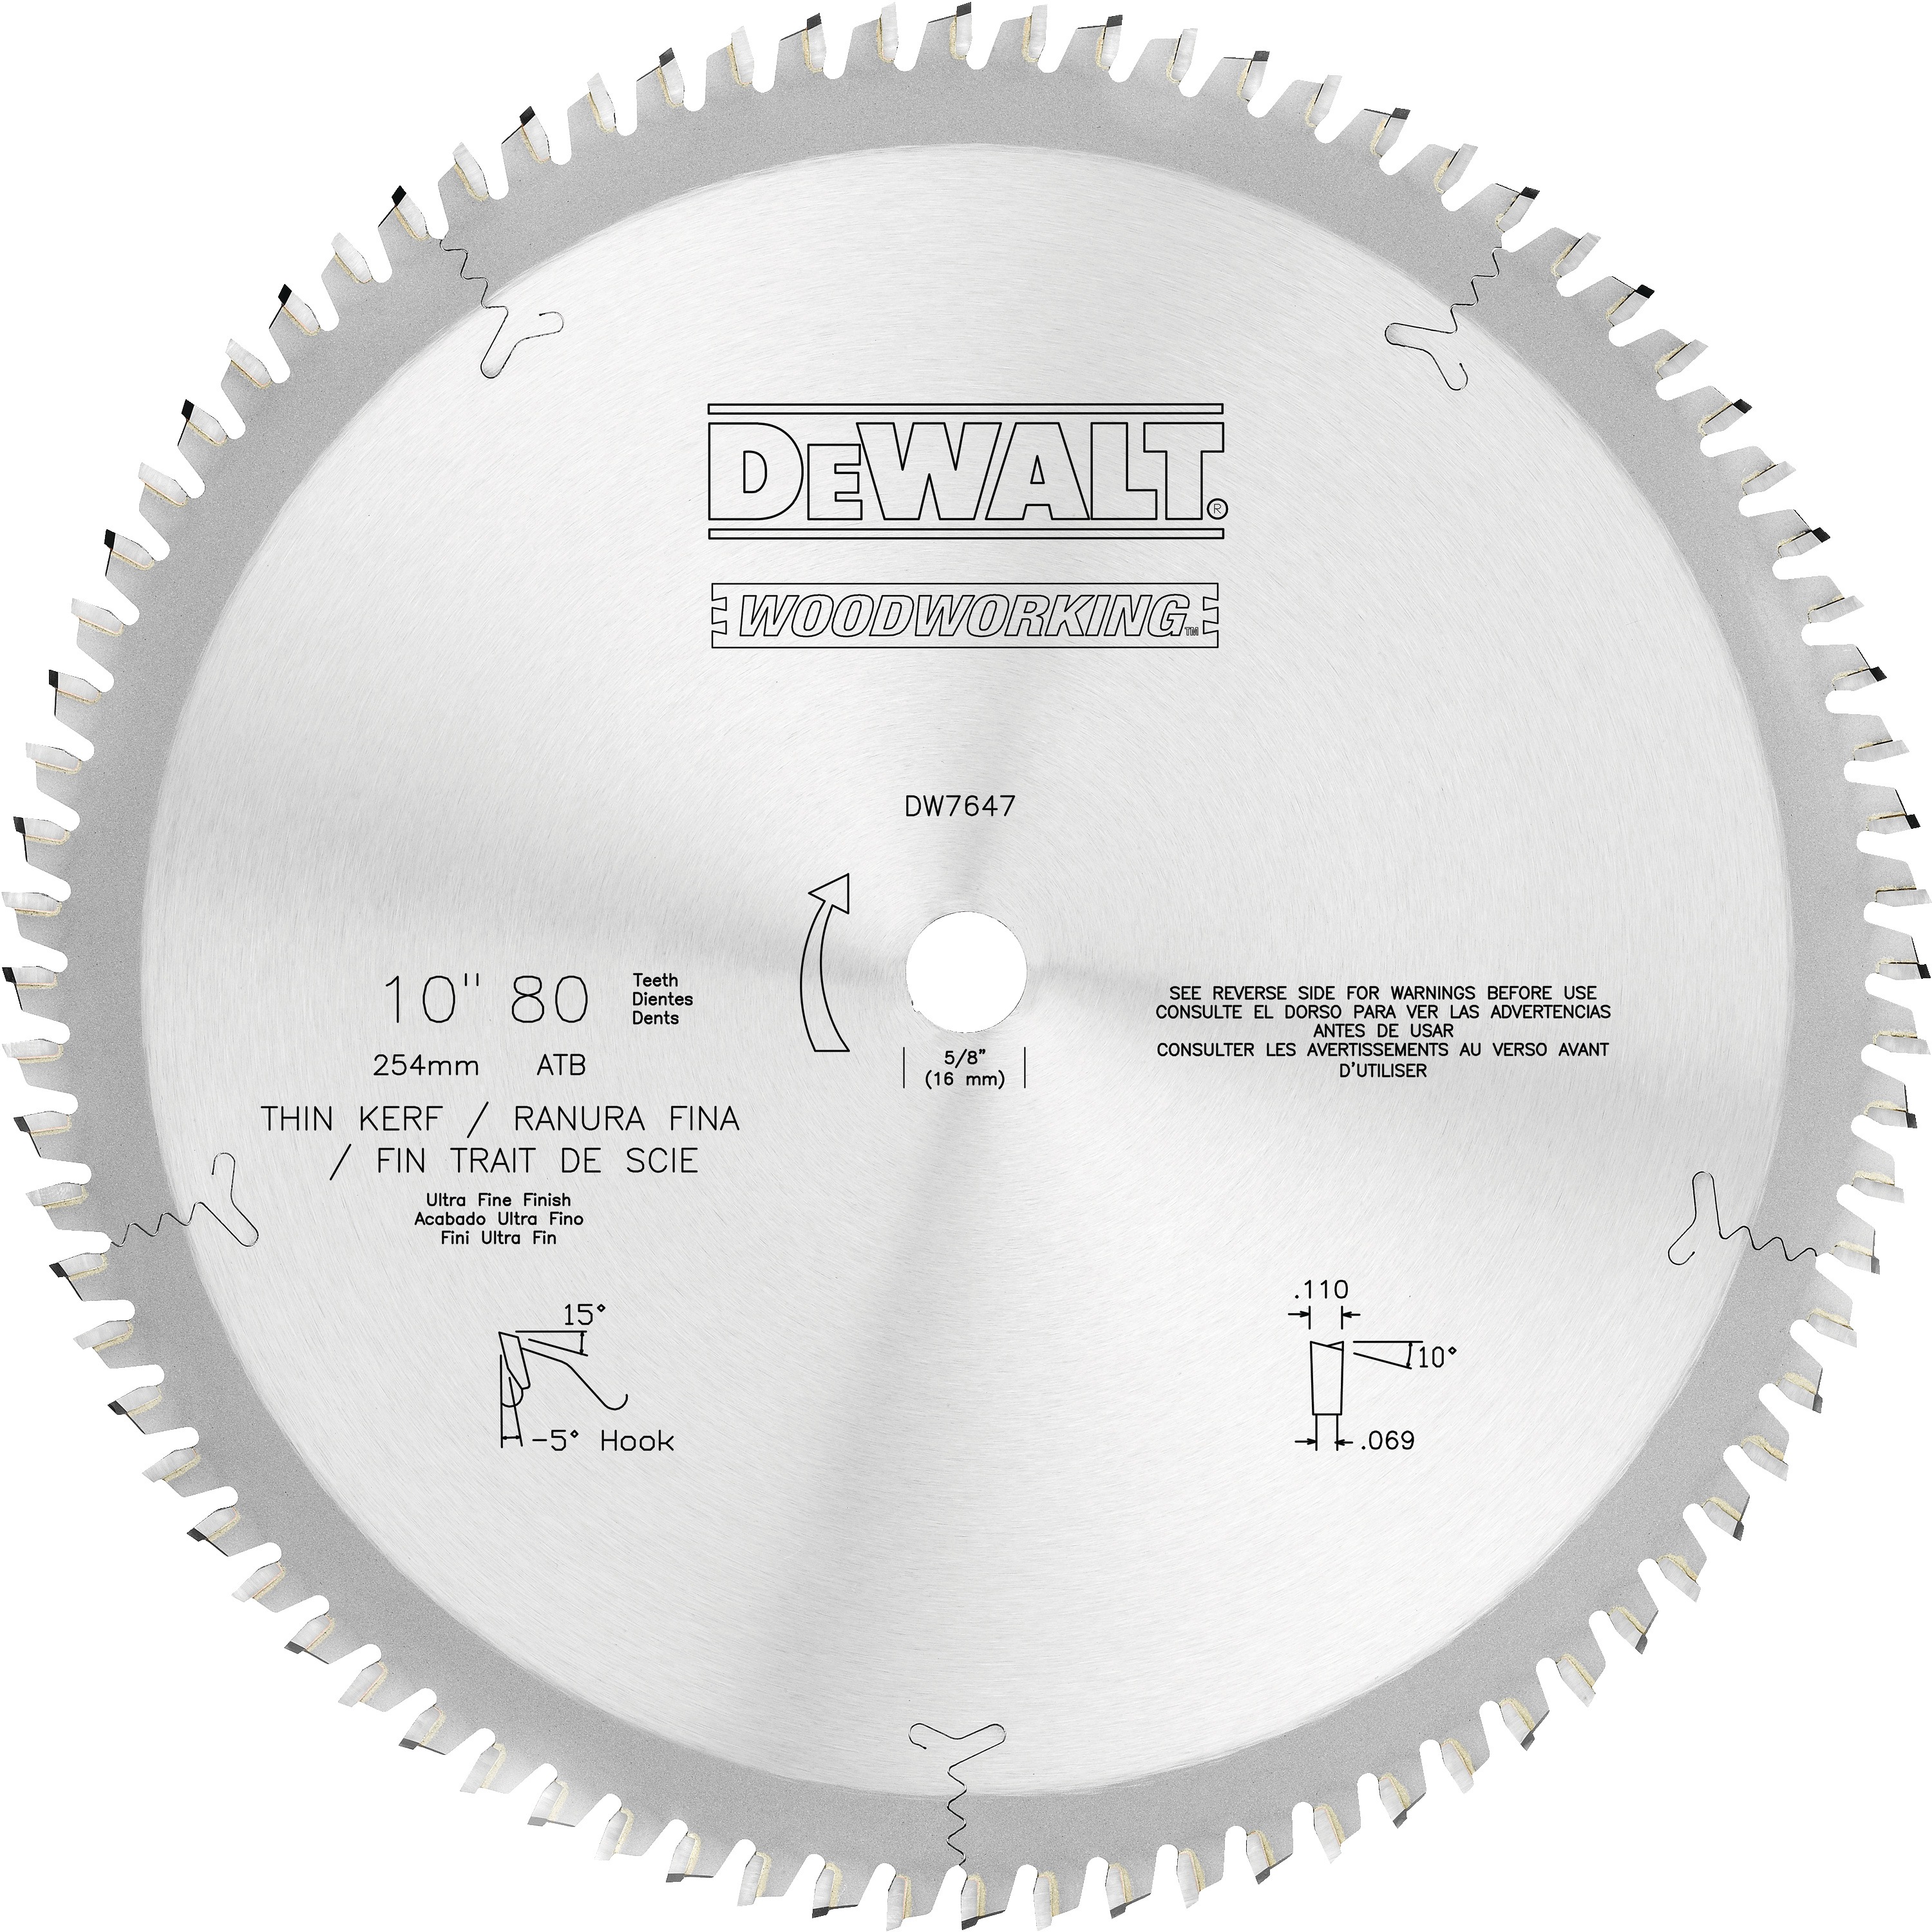 DEWALT - 10 80T UltraFine Crosscuts Table Saw Thin Kerf - DW7647